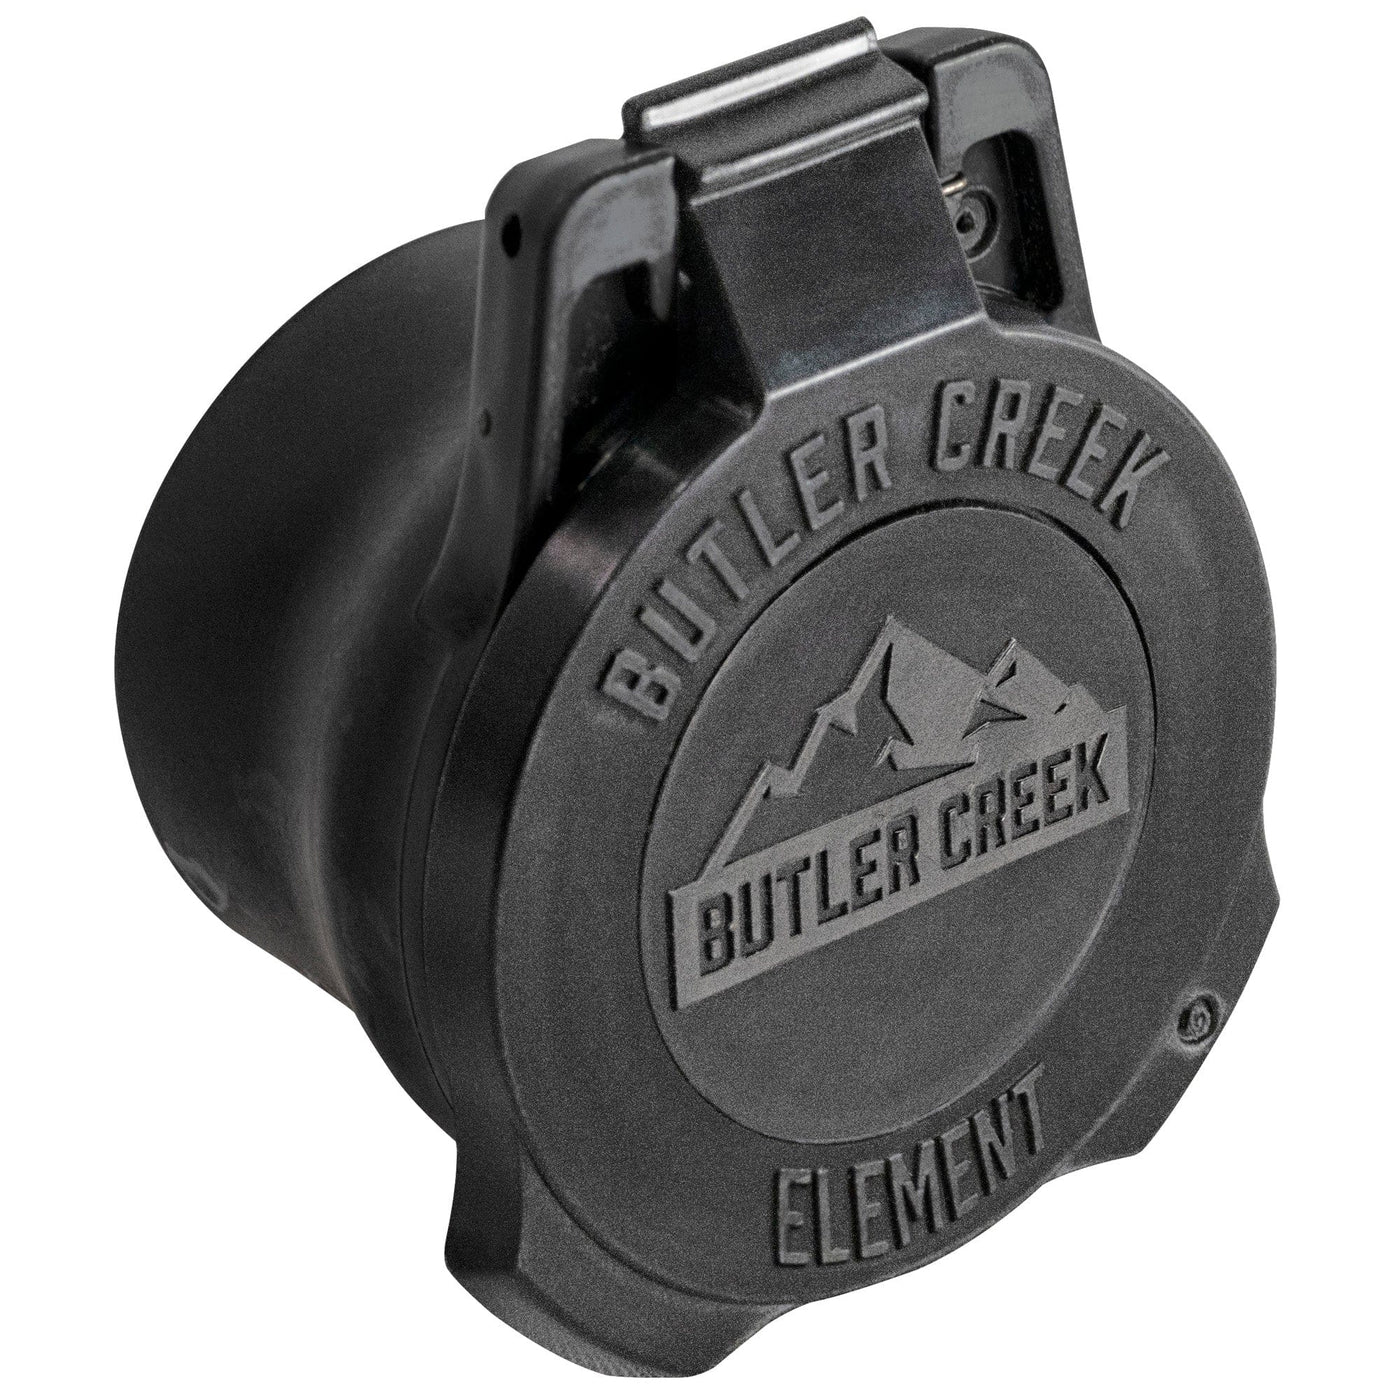 Butler Creek Butler Creek Element Scope Cap Black Objective 55-60mm Scope Mounts